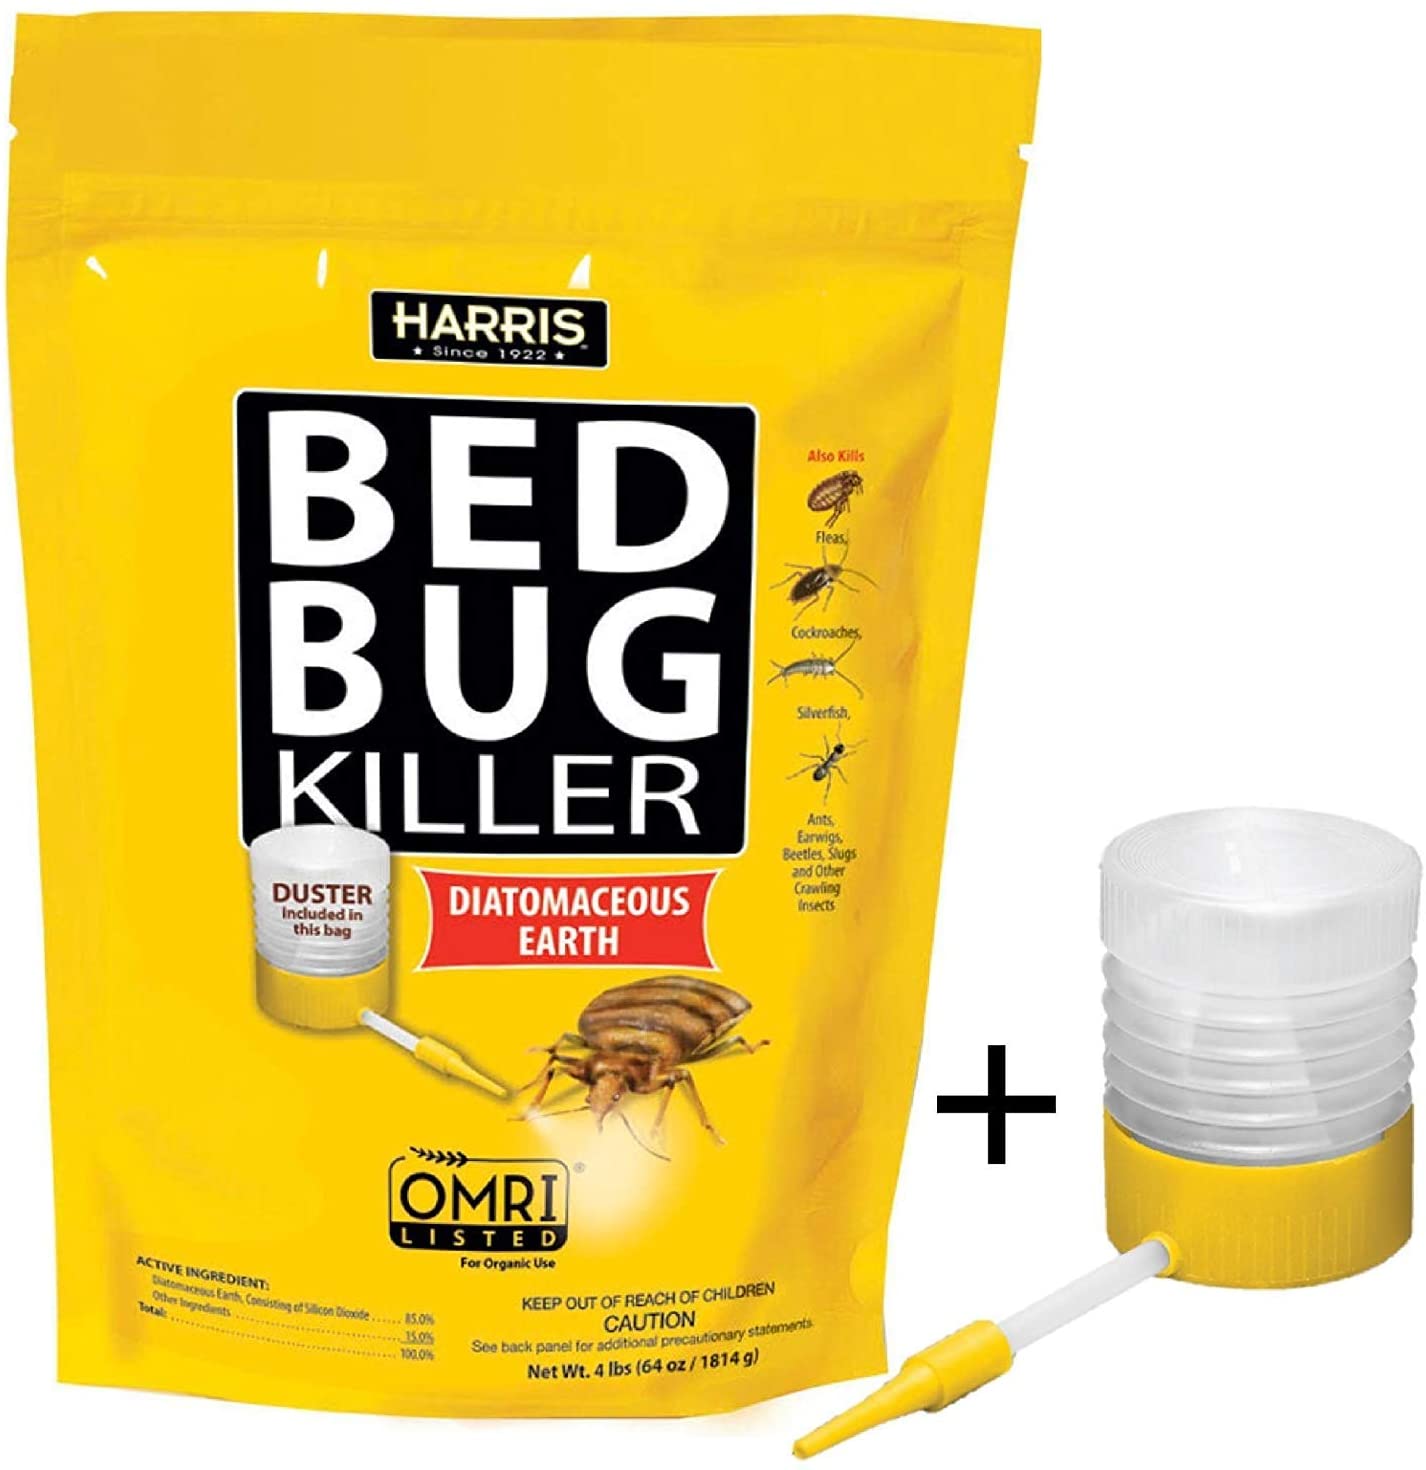 HARRIS Bed Bug Killer Diatomaceous Earth